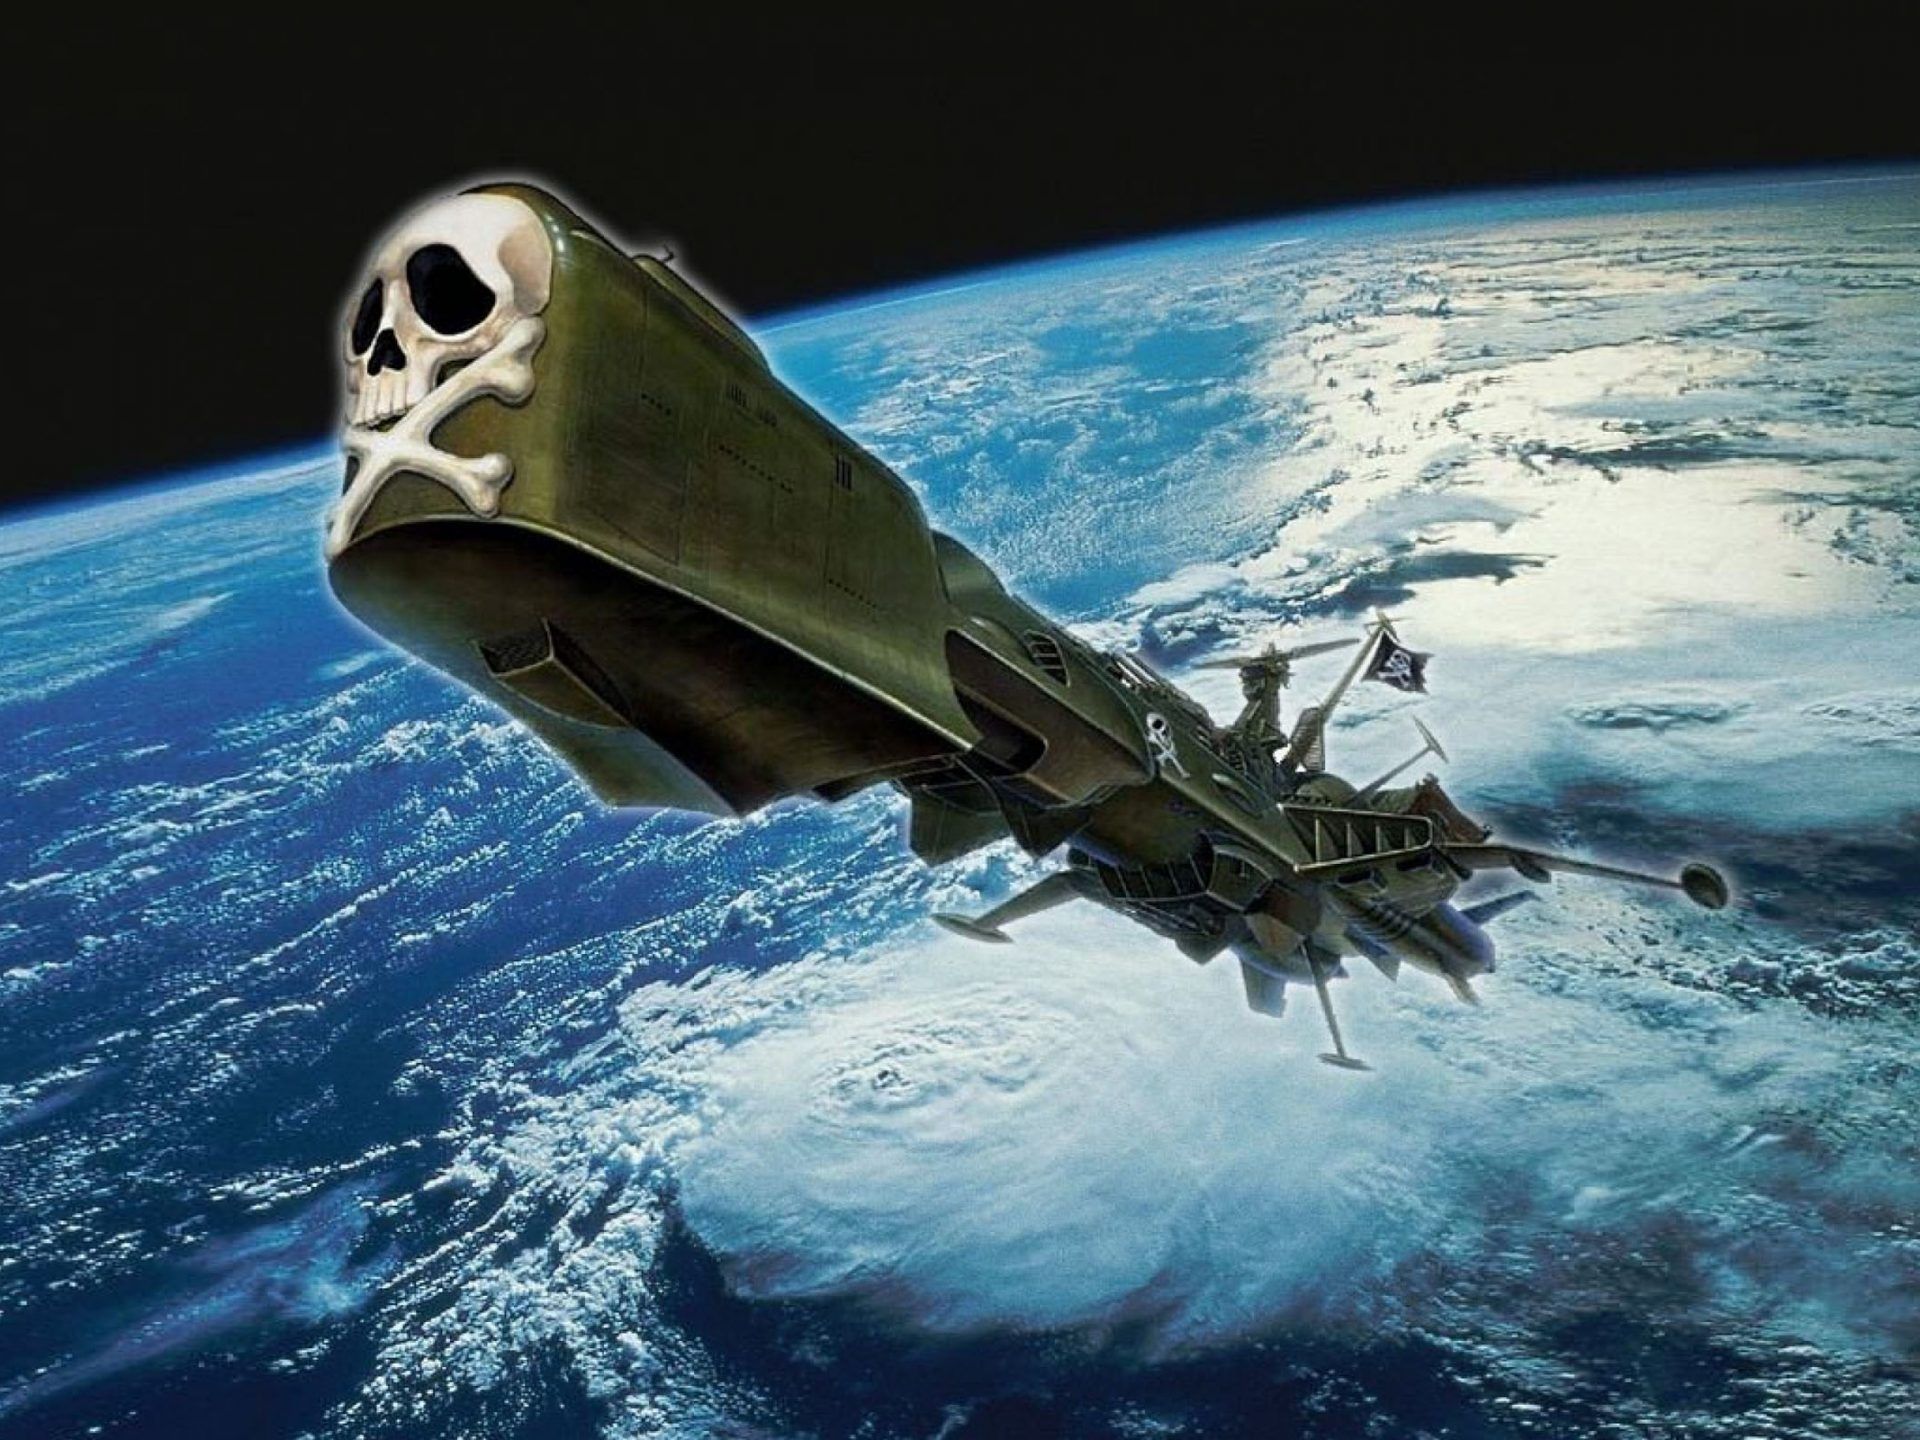 Sci Fi Pirate Spaceship Or Digital Art Inspiration Widescreen Free Download, Wallpaper13.com